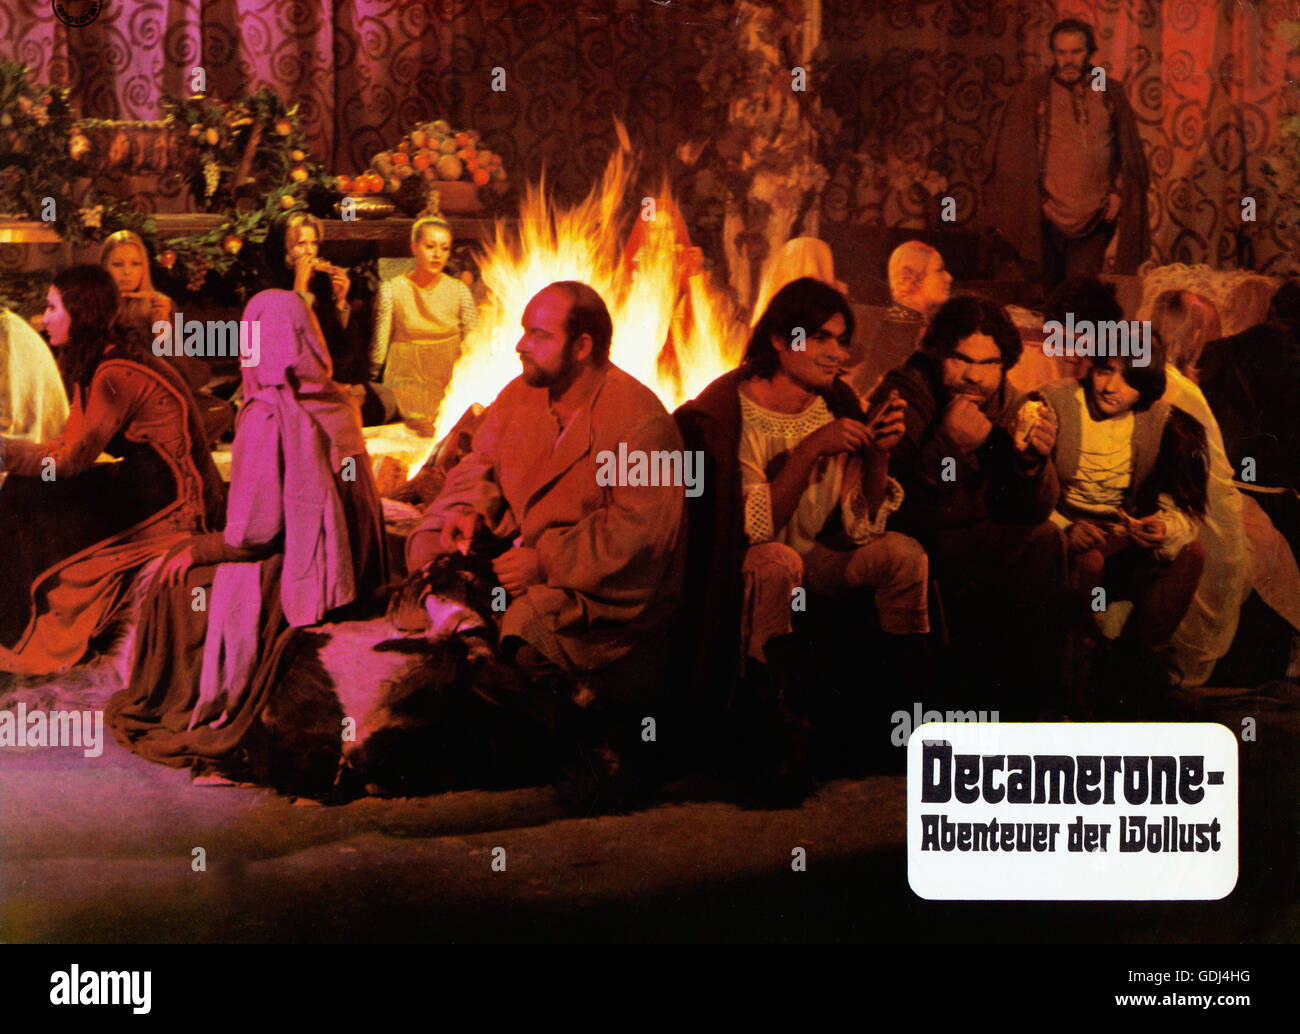 Storie scellerate, aka: Decamerone - Abenteuer der Wollust, Italien/Frankreich 1973, Regie: Sergio Citti, Darsteller: Ninetto Davoli, Franco Citti Stock Photo